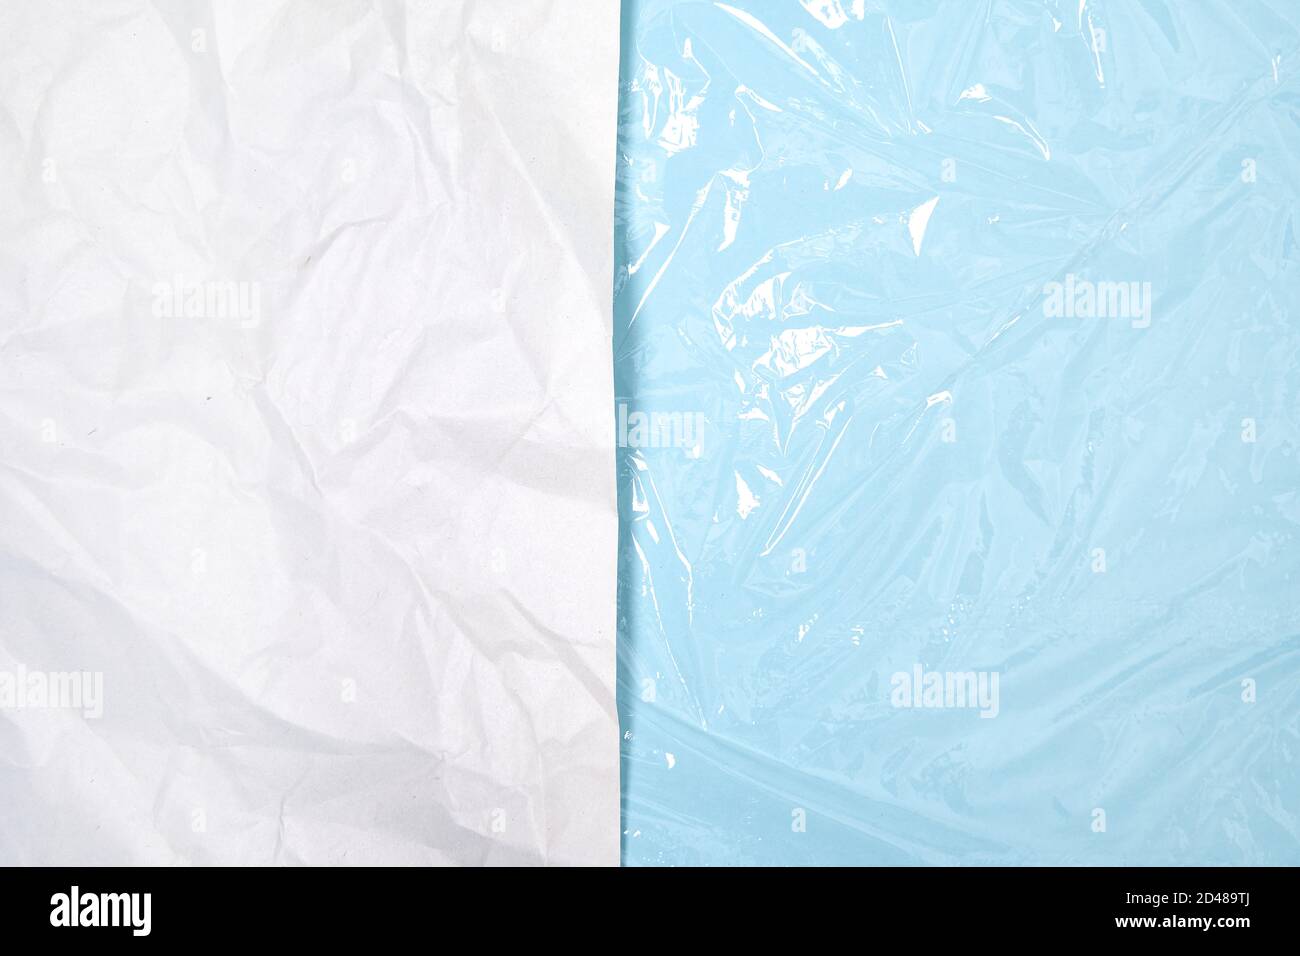 Textura de plástico transparente con color azul frente a textura de papel.  Envoltura de politeno de nylon. Estilo de vida libre de plástico,  contaminación ecológica Fotografía de stock - Alamy